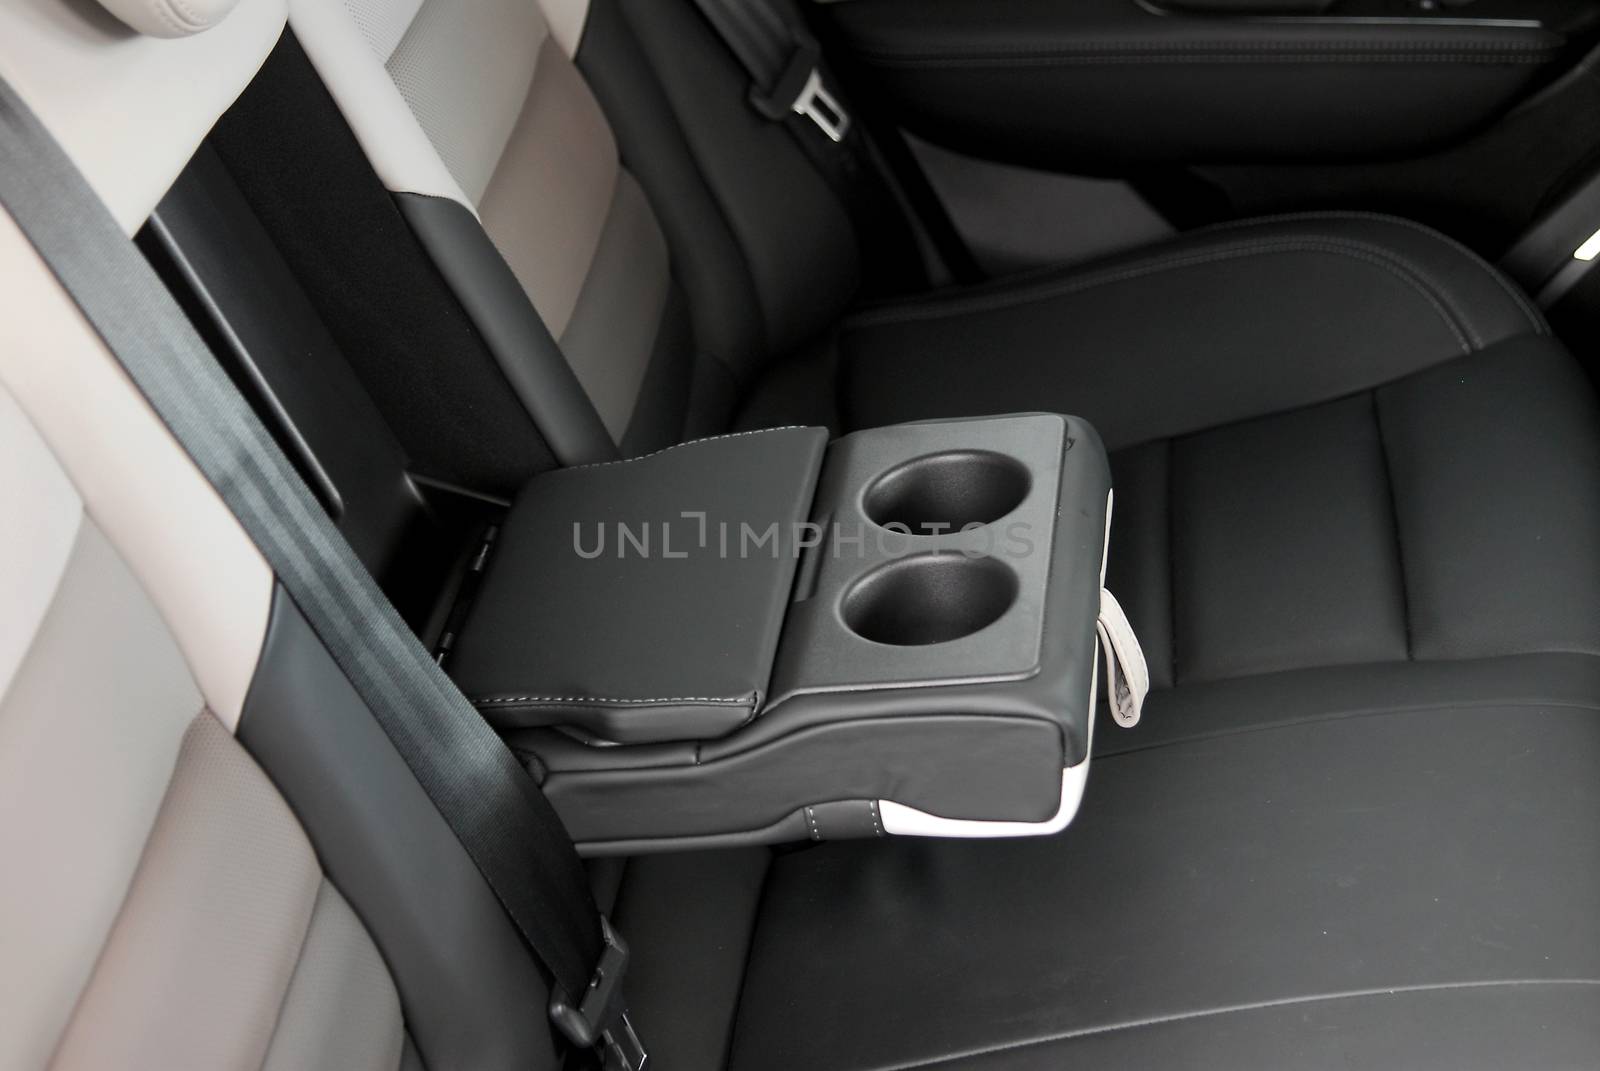 armrest in the luxury passenger car, rear seats